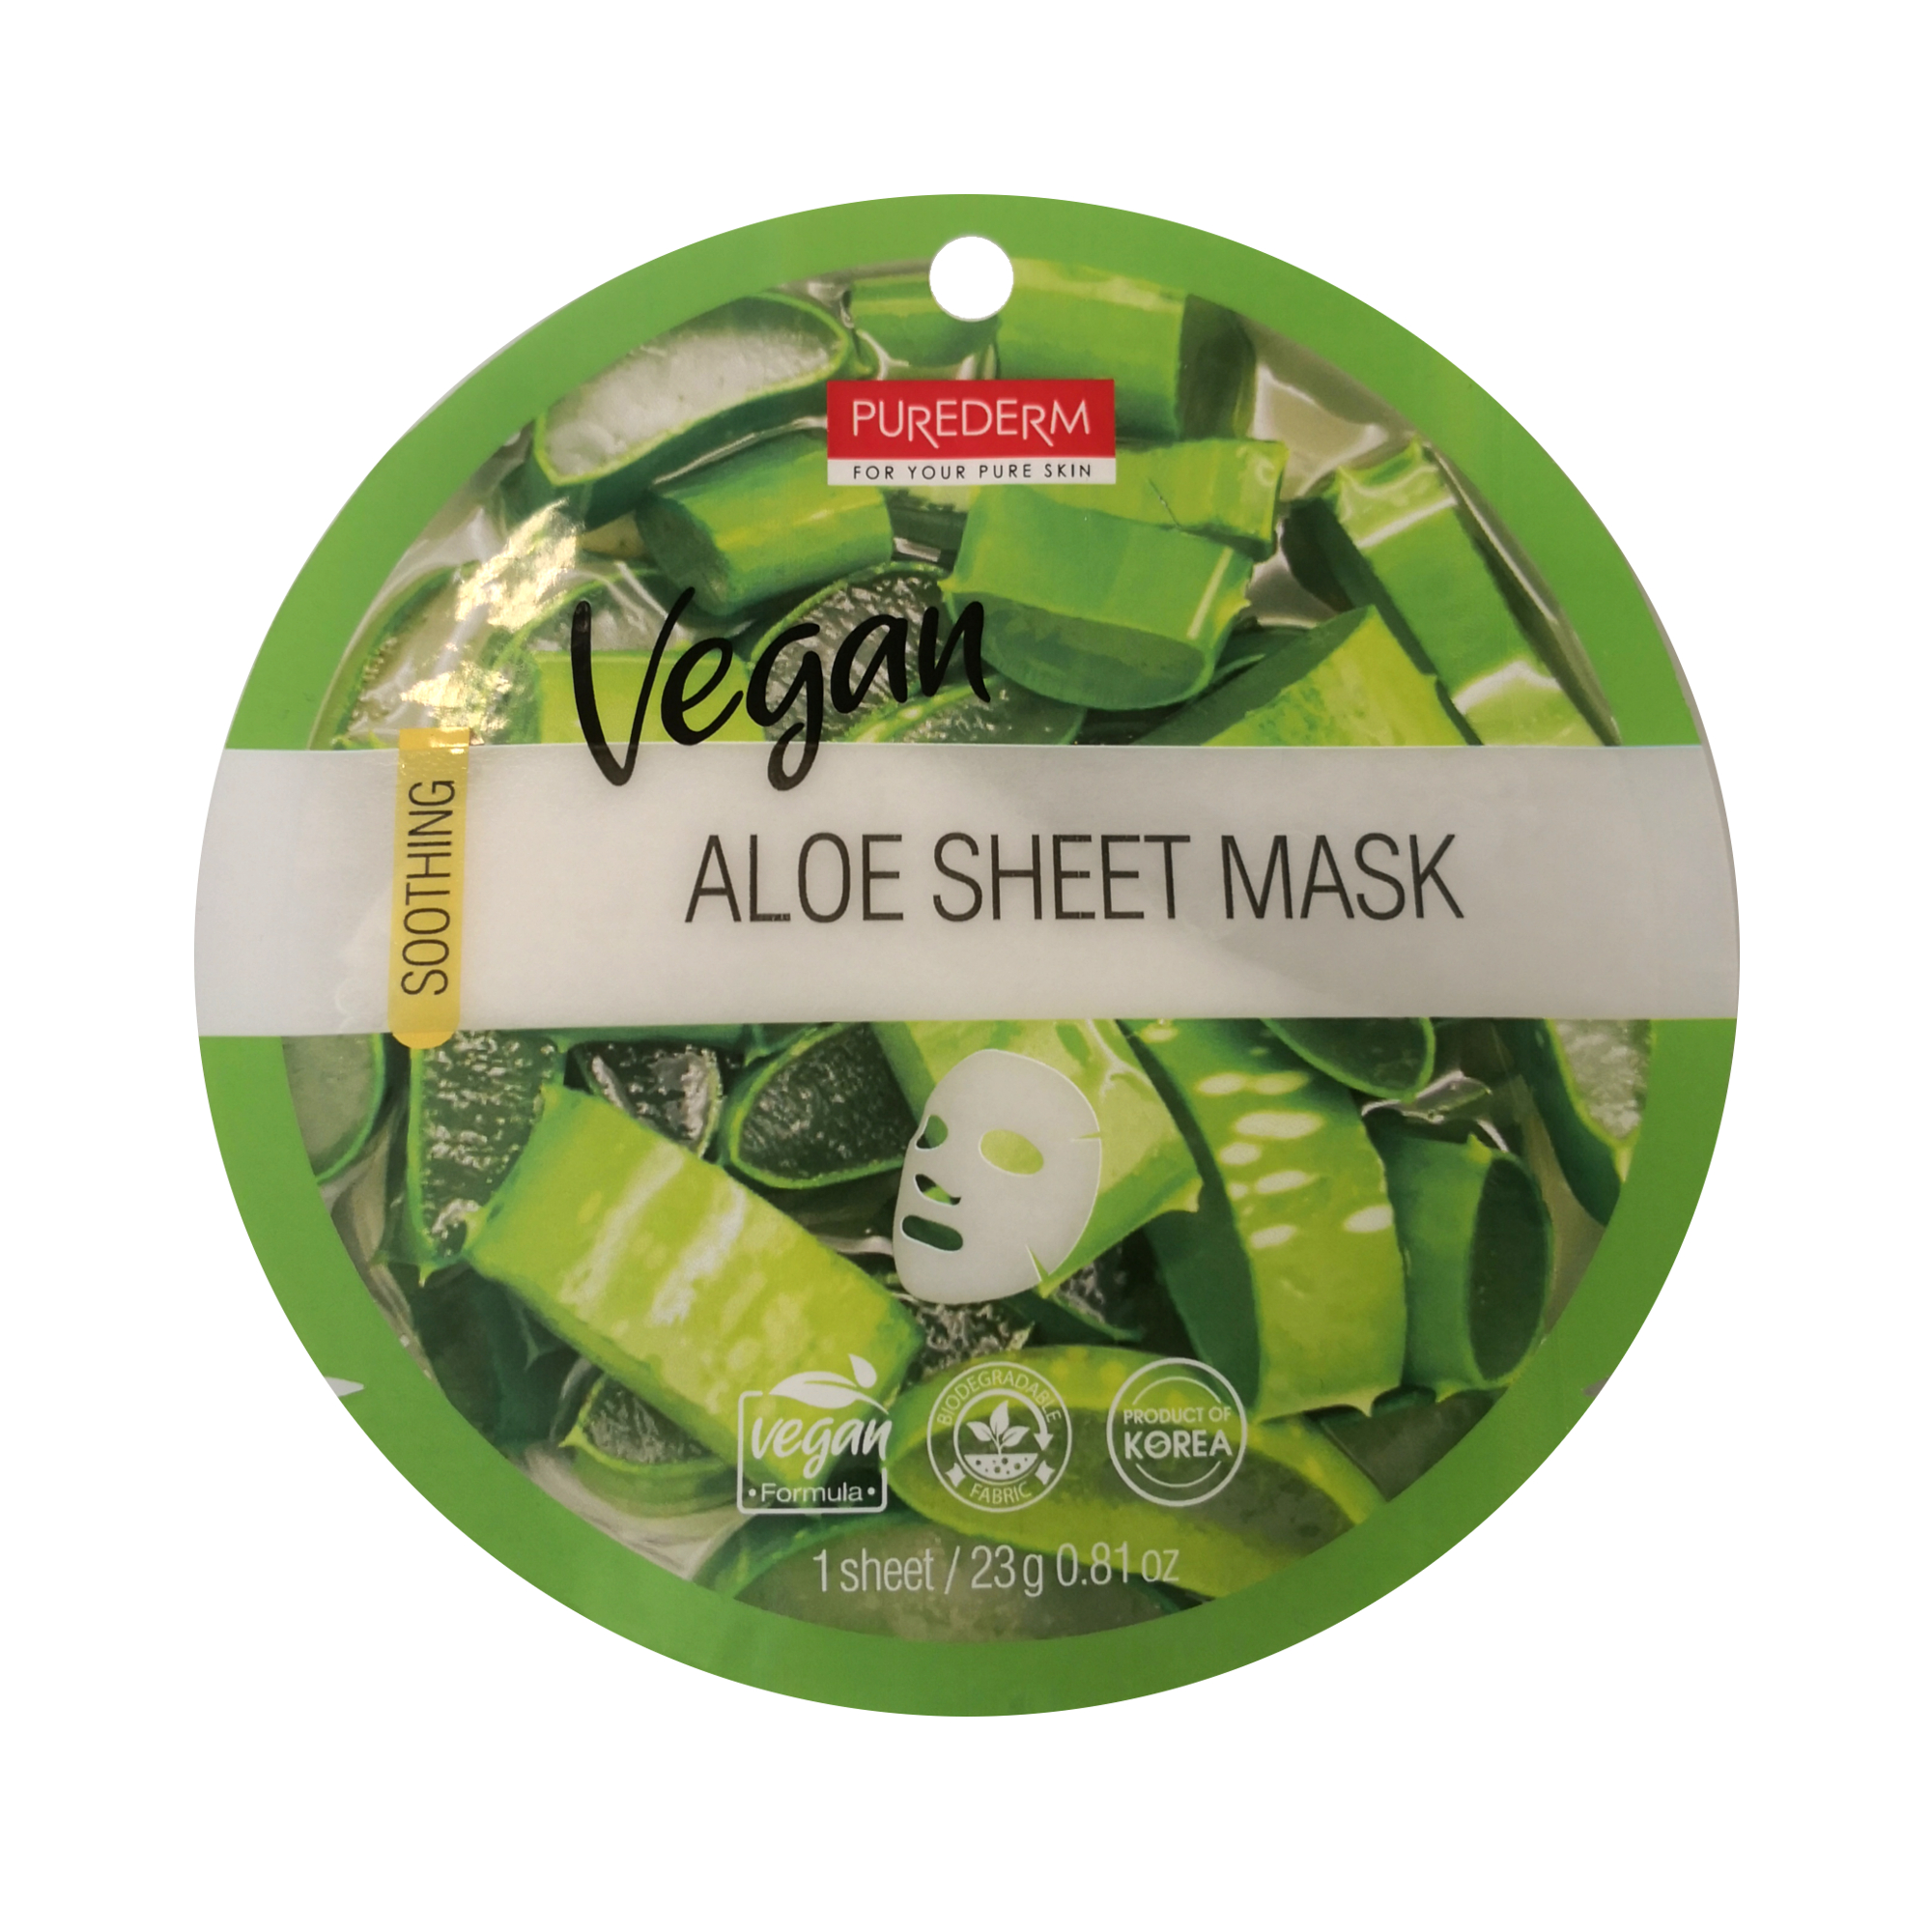 Purederm Vegan Aloe Sheet Mask 1 st